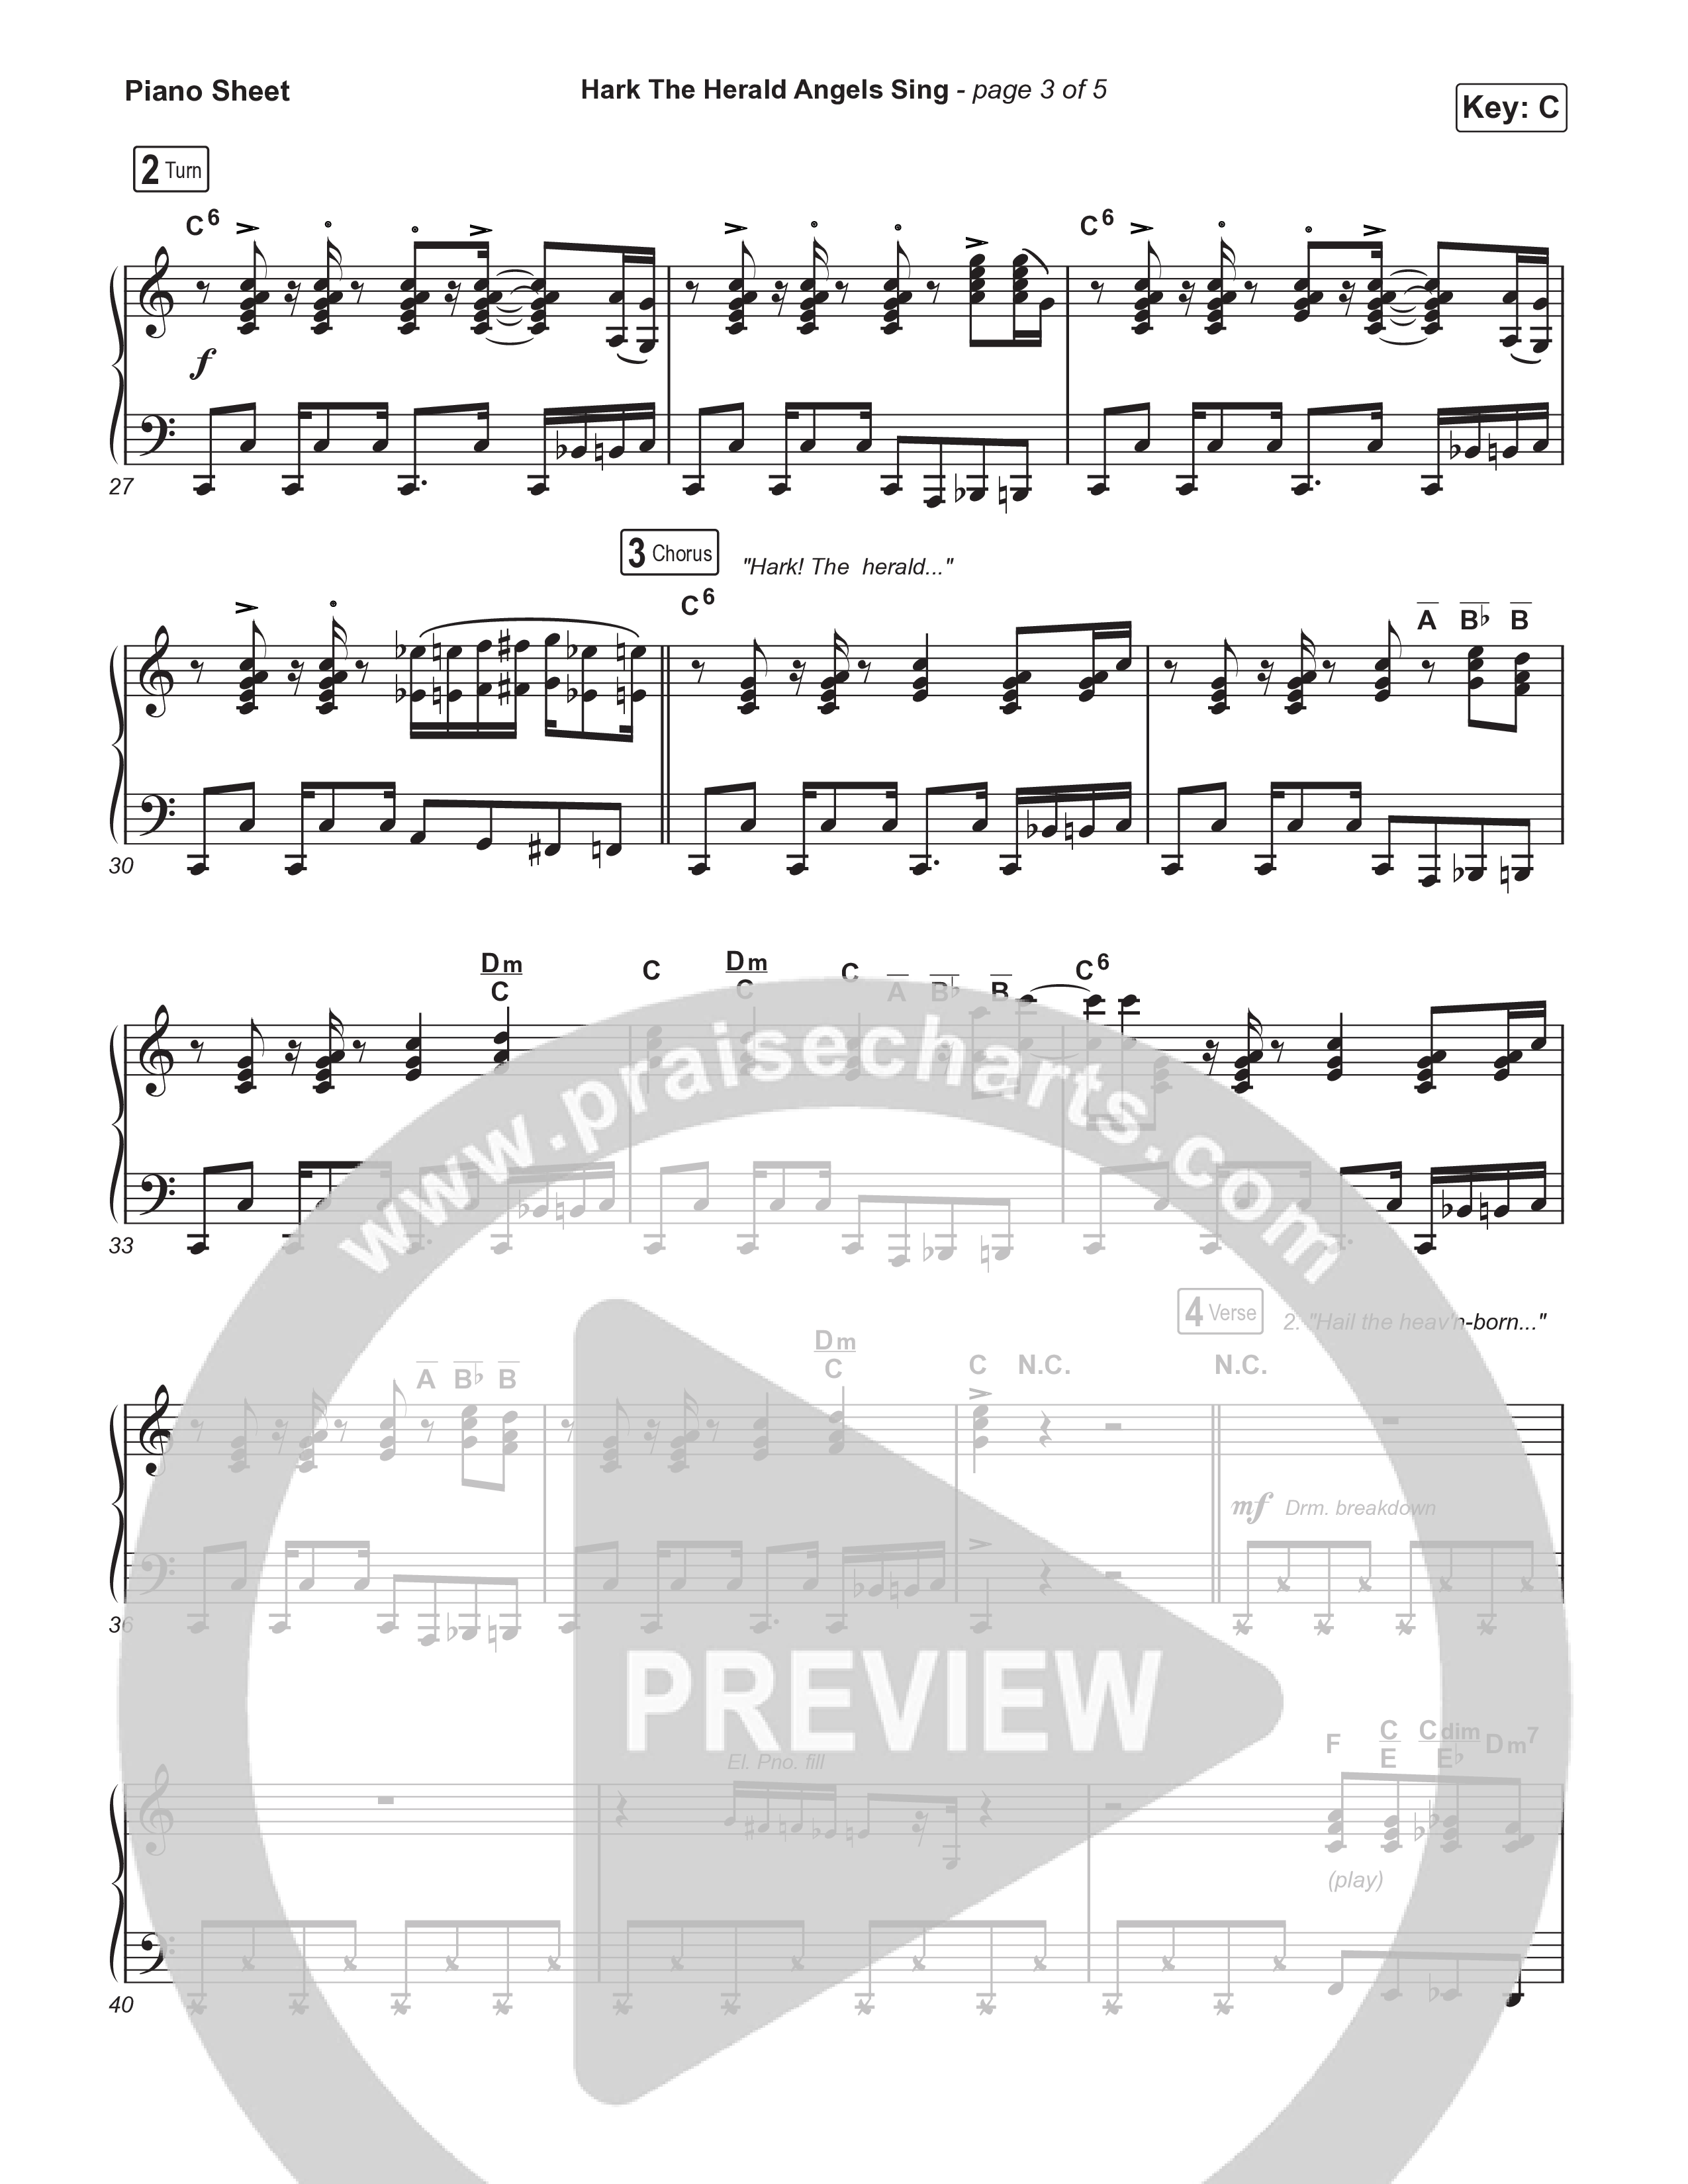 Hark The Herald Angels Sing Piano Sheet (CCV Music)